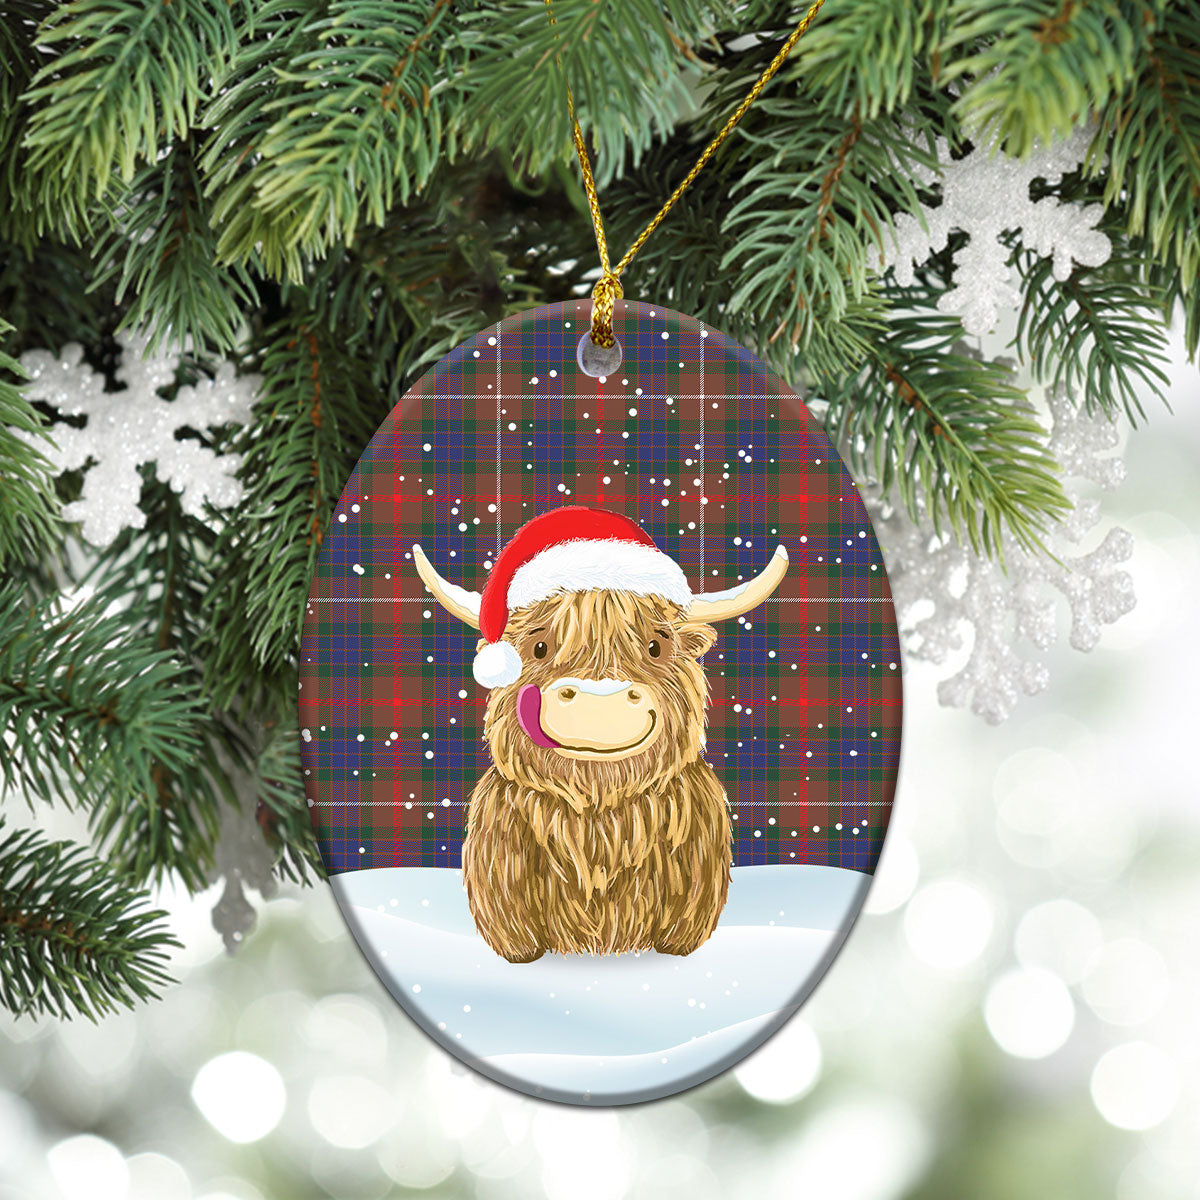 Fraser (of Lovat) Hunting Modern Tartan Christmas Ceramic Ornament - Highland Cows Style